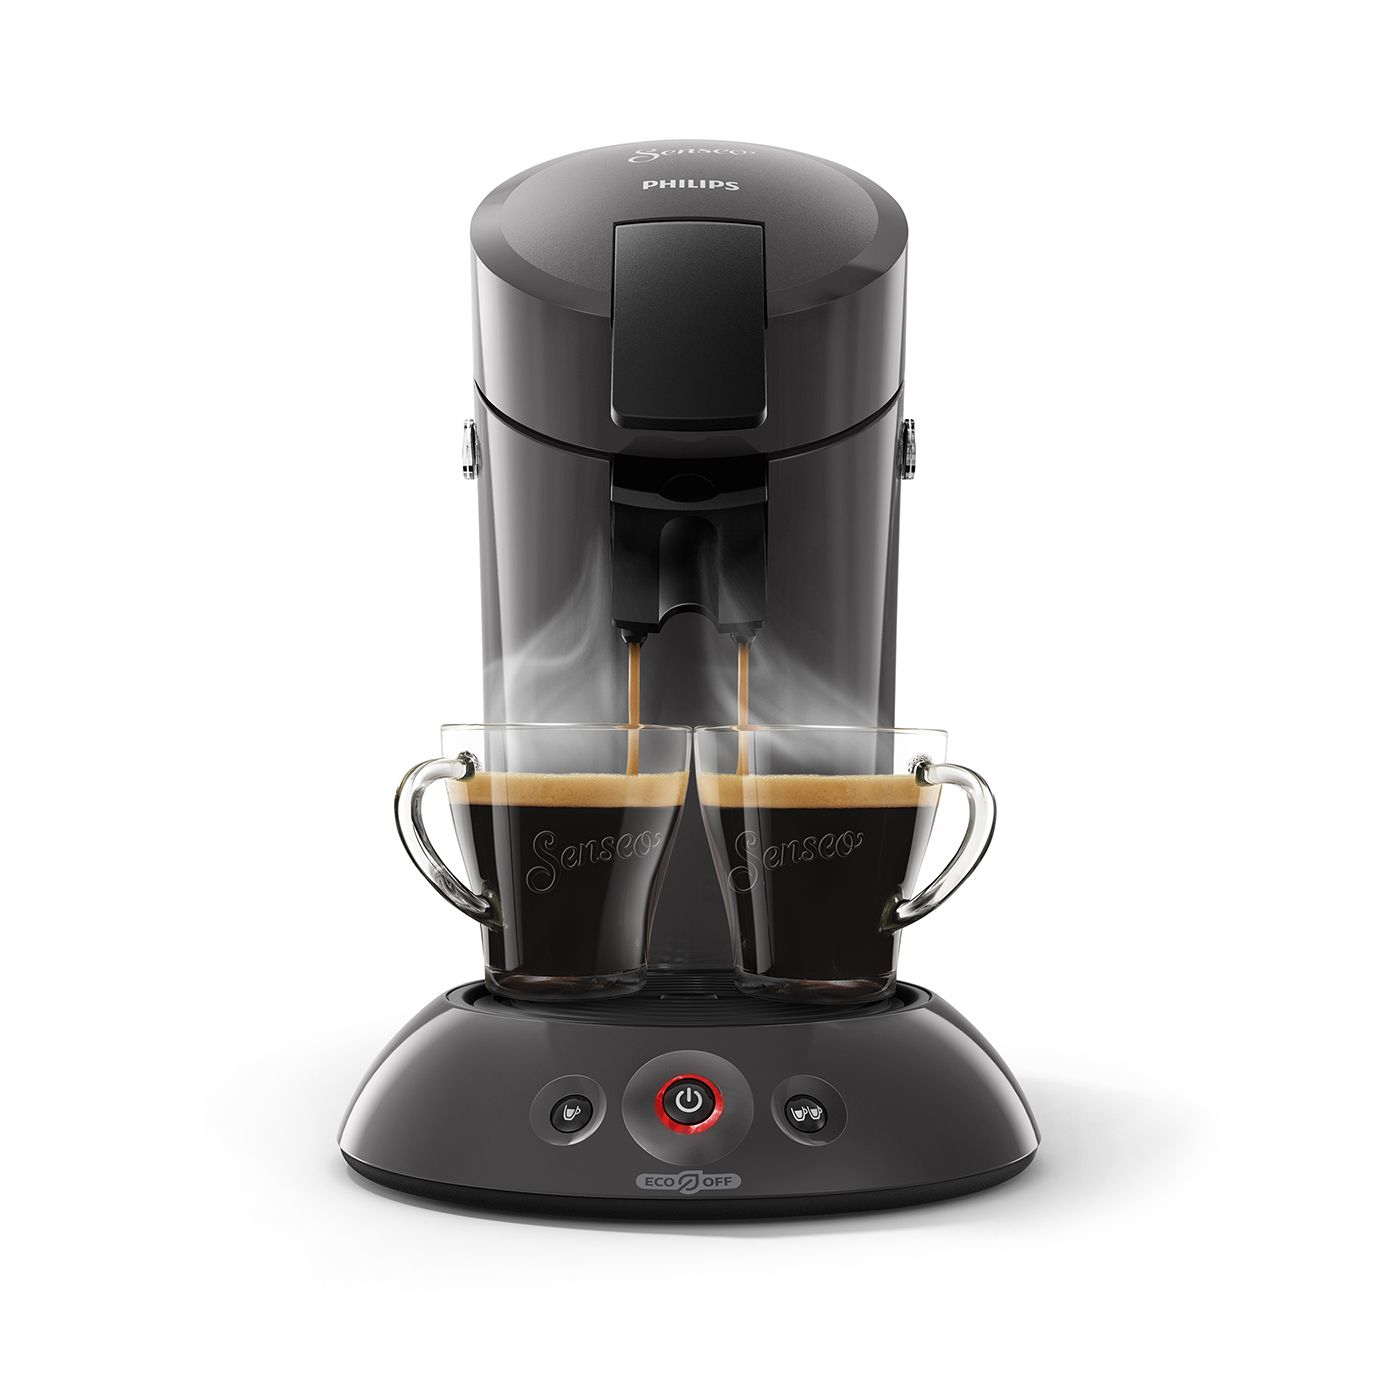 Senseo HD6552/38 coffee maker